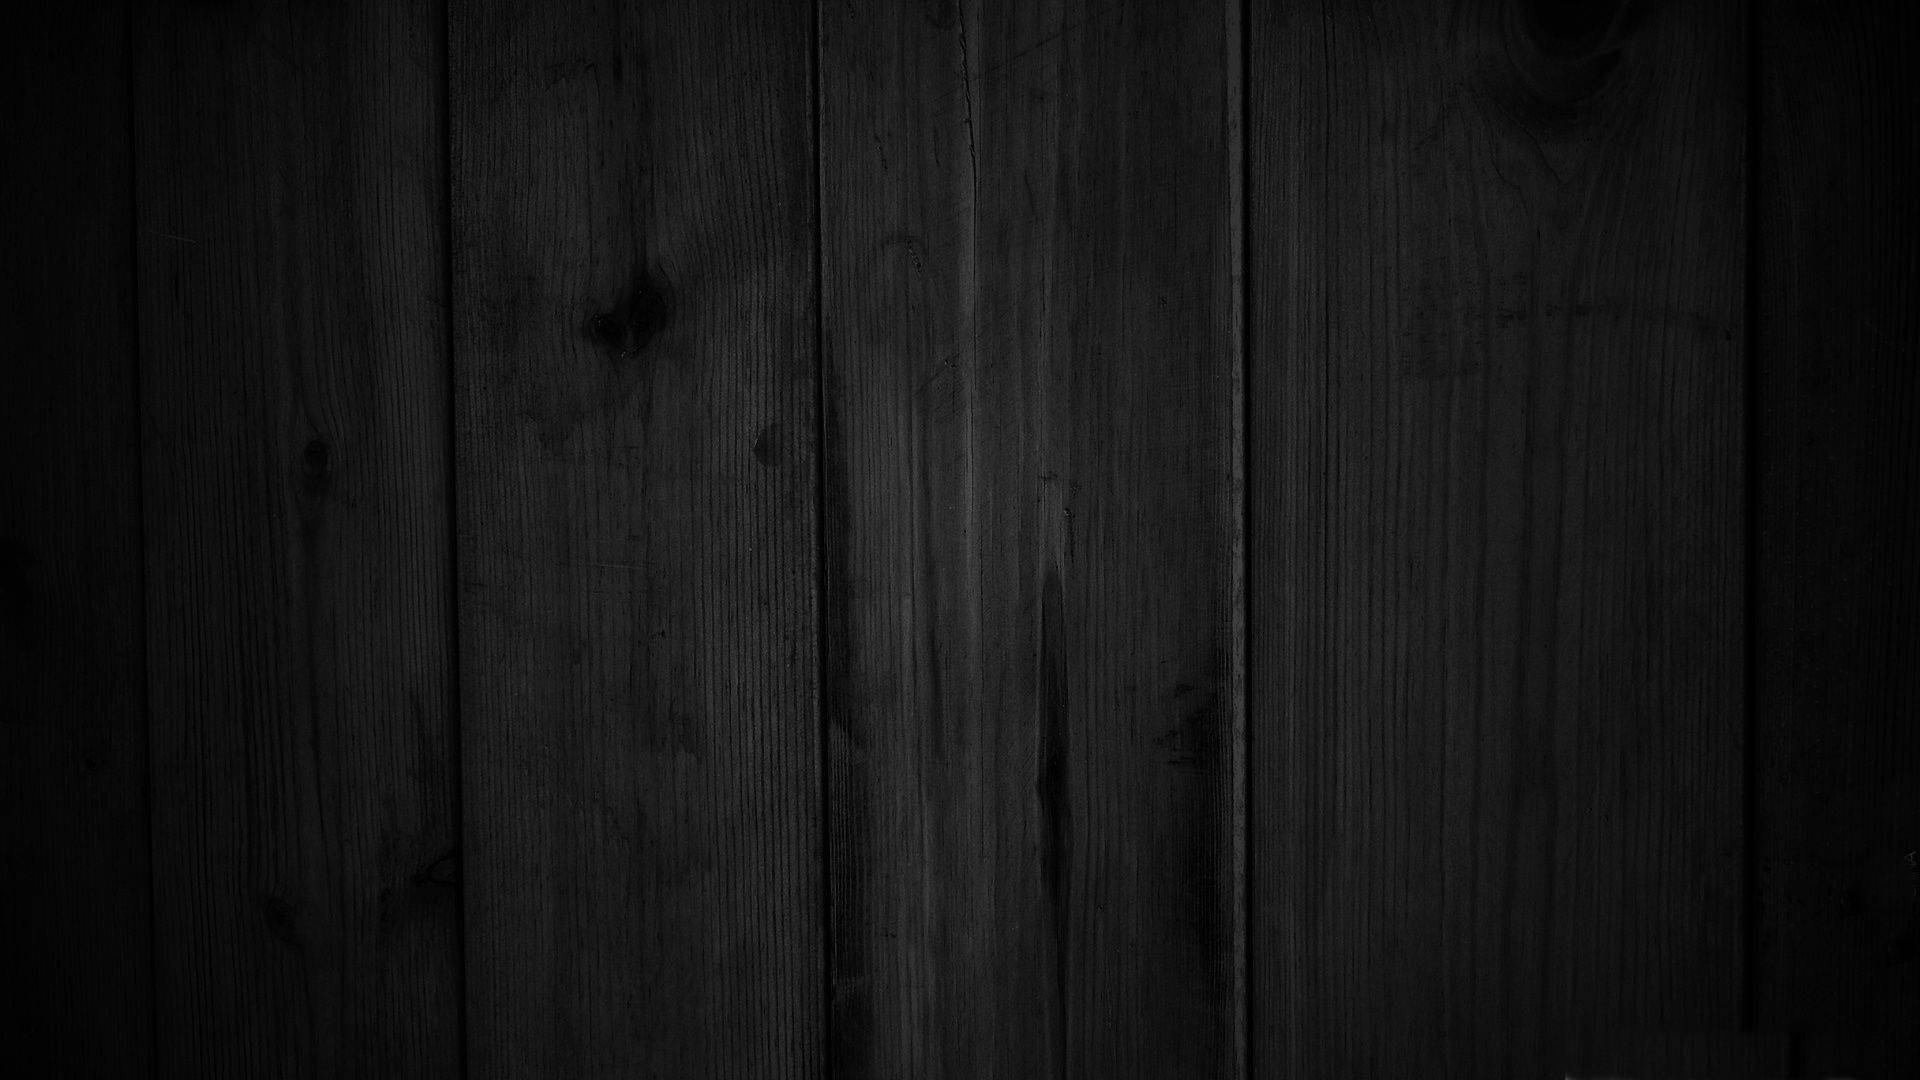 Cool Dark Wooden Wall